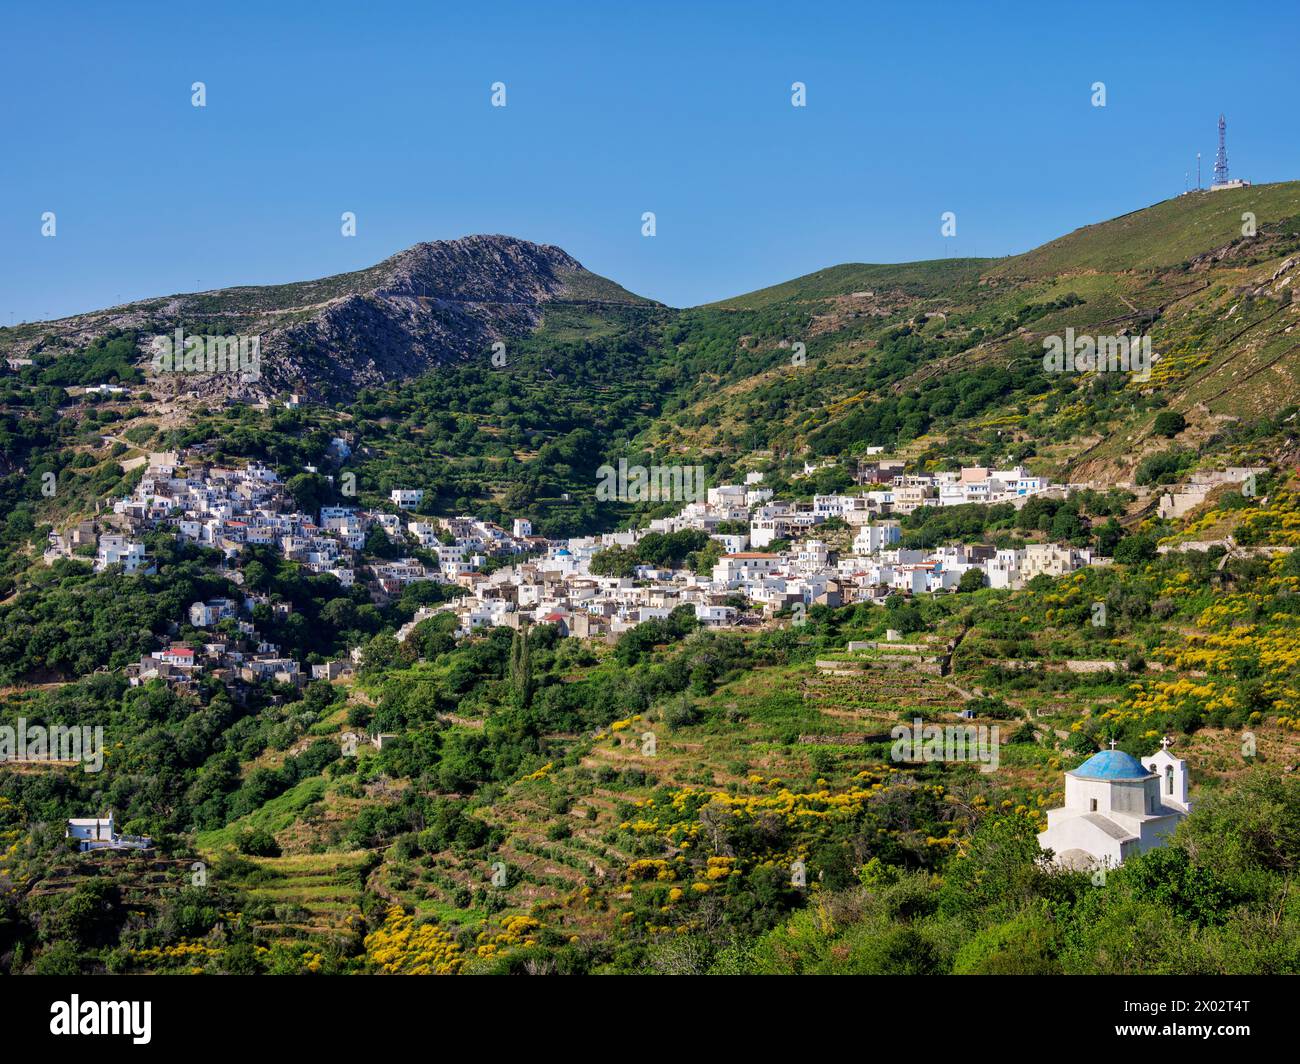 Église de. George et Koronos Village vu de Skado Village, Naxos Island, Cyclades, Greek Islands, Greece, Europe Banque D'Images